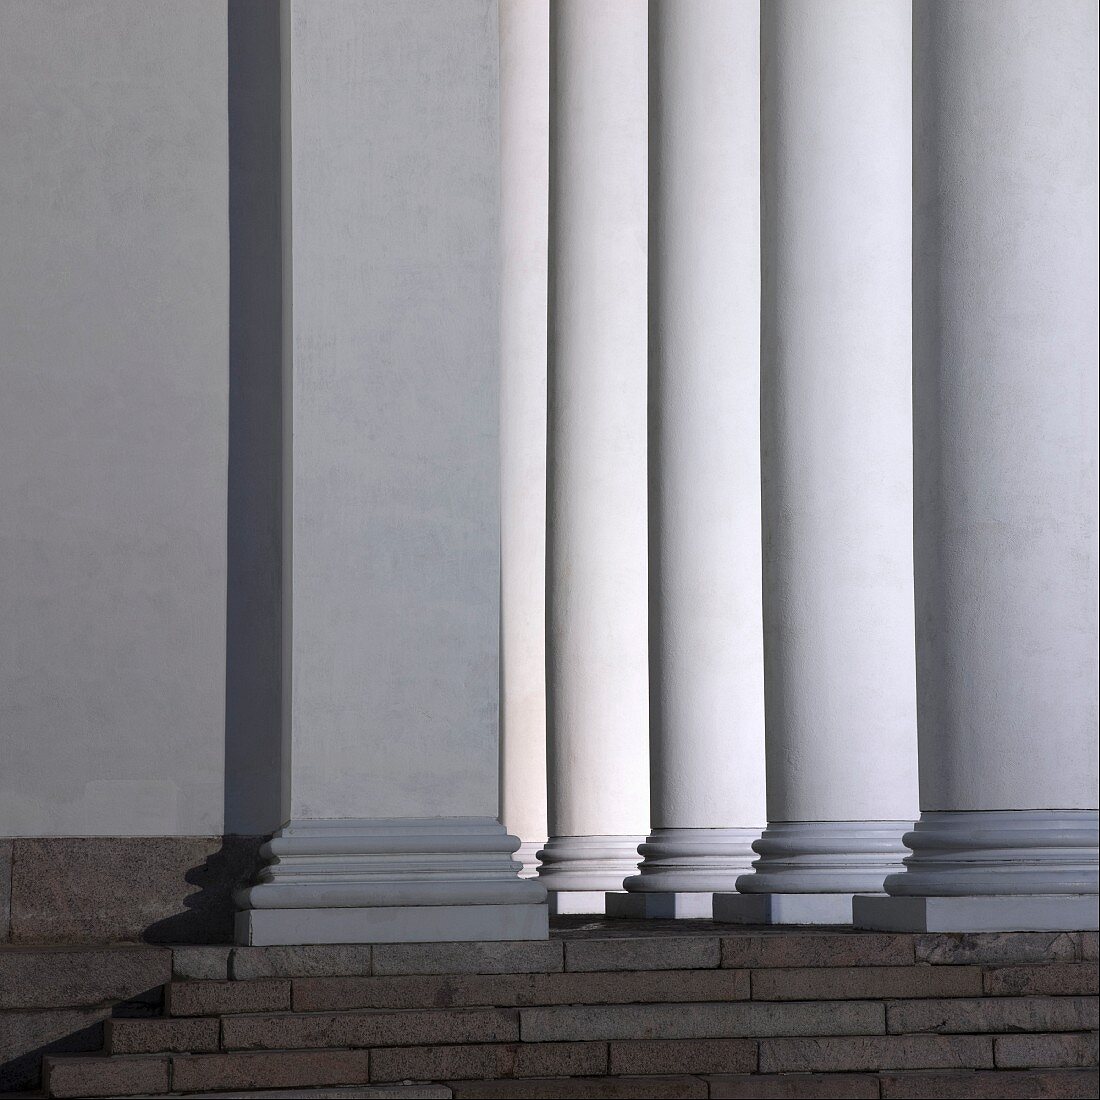 Säulen bei einer Kirche (Helsinki)